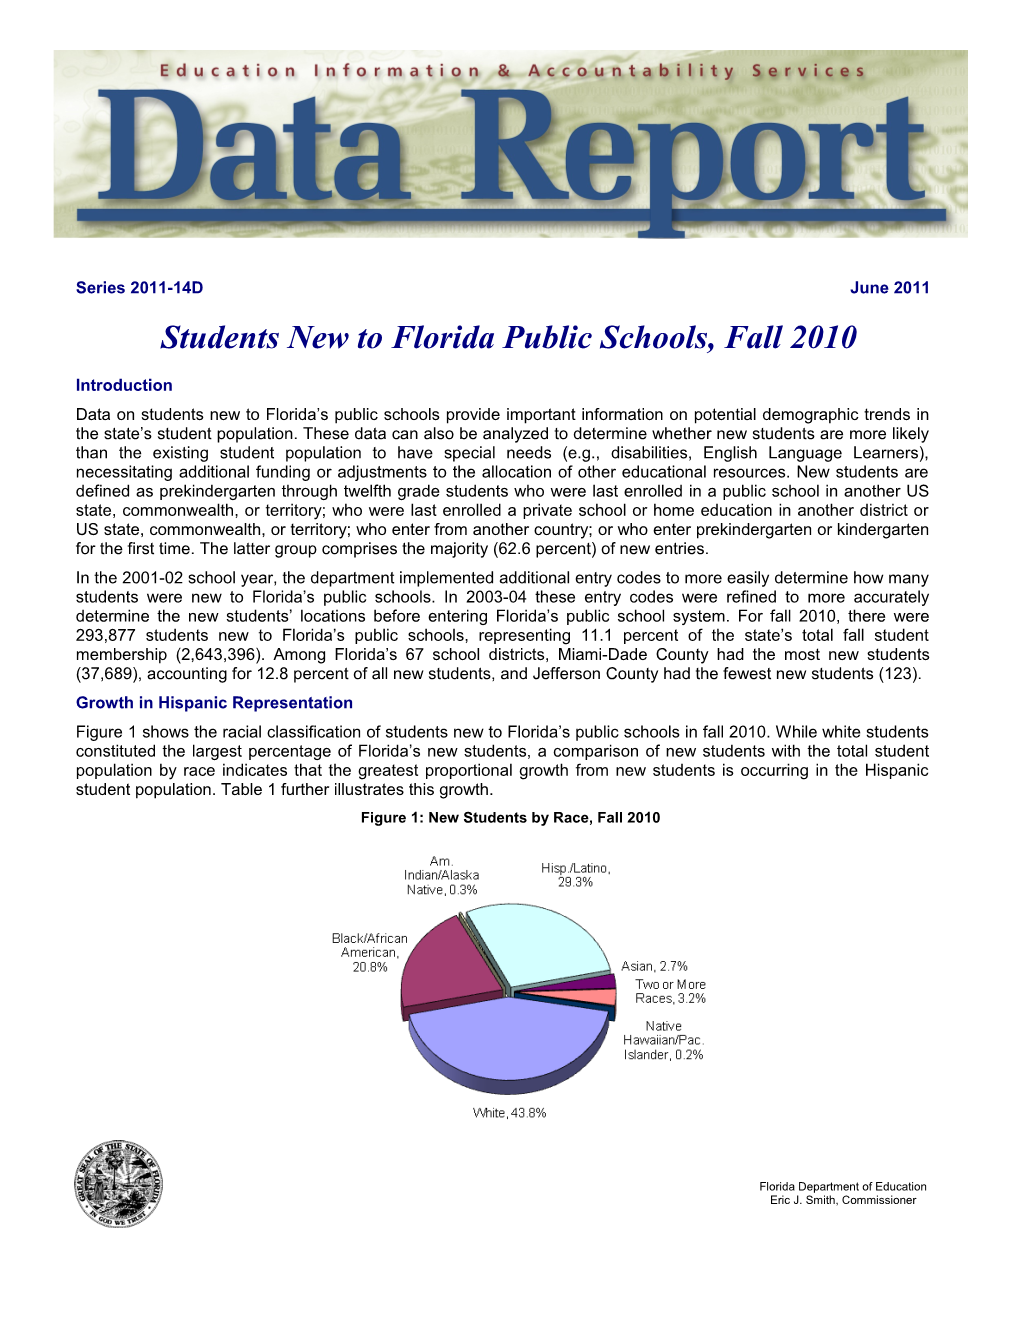 Students New to Florida Public Schools, Fall 2010